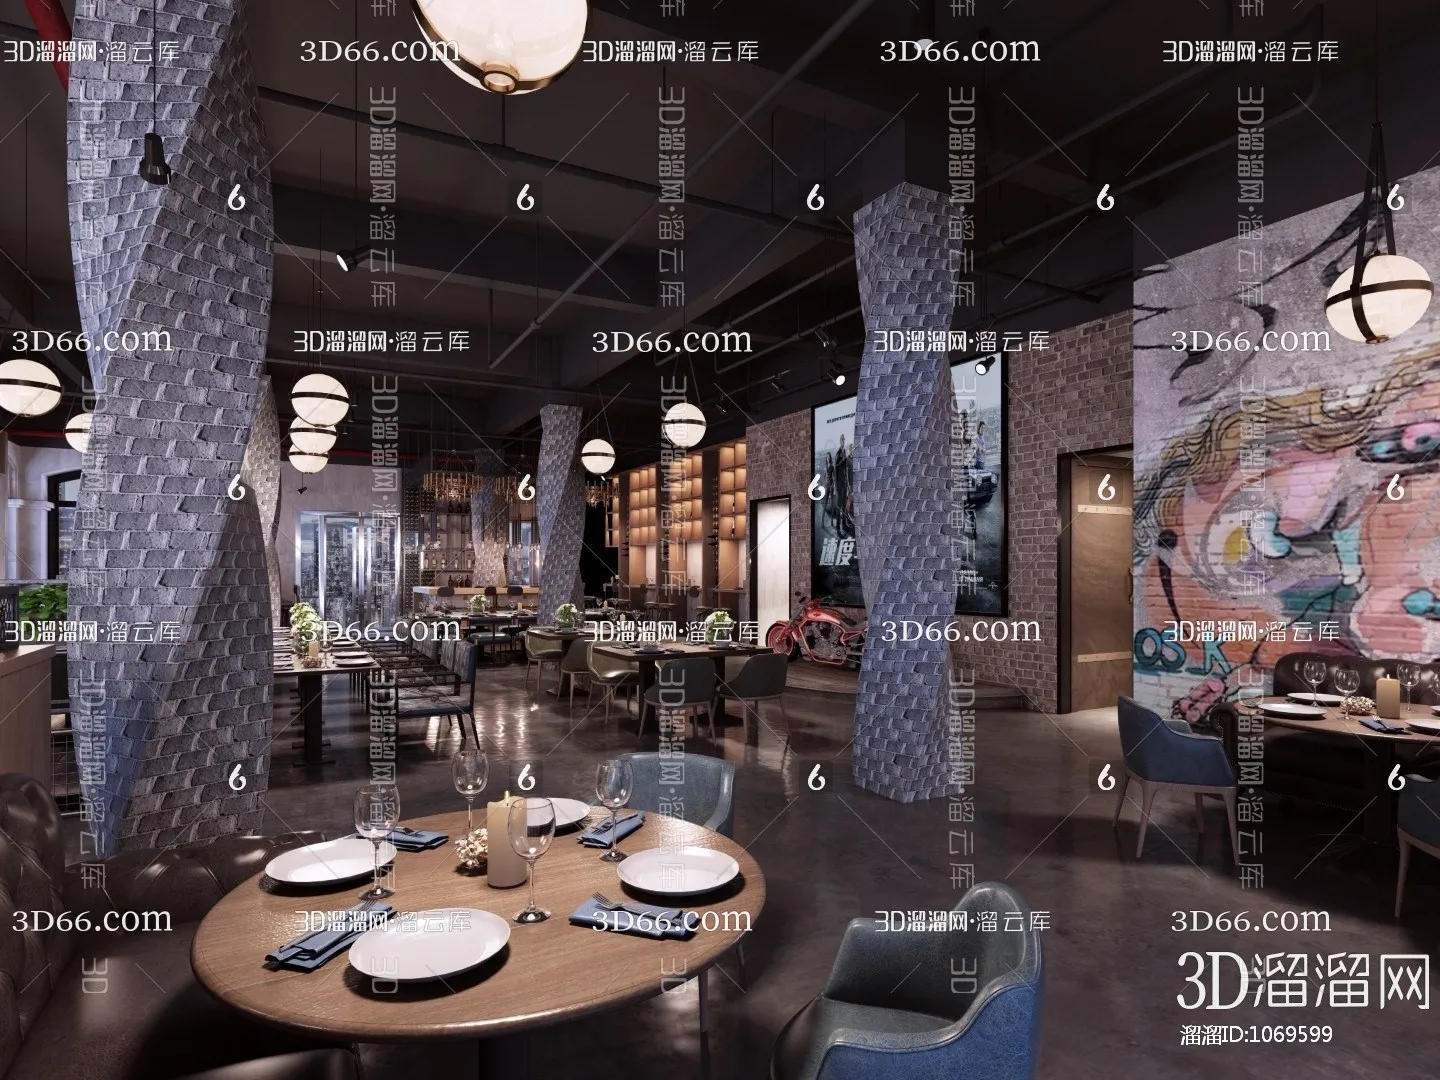 Restaurant 3D Scenes – 0727